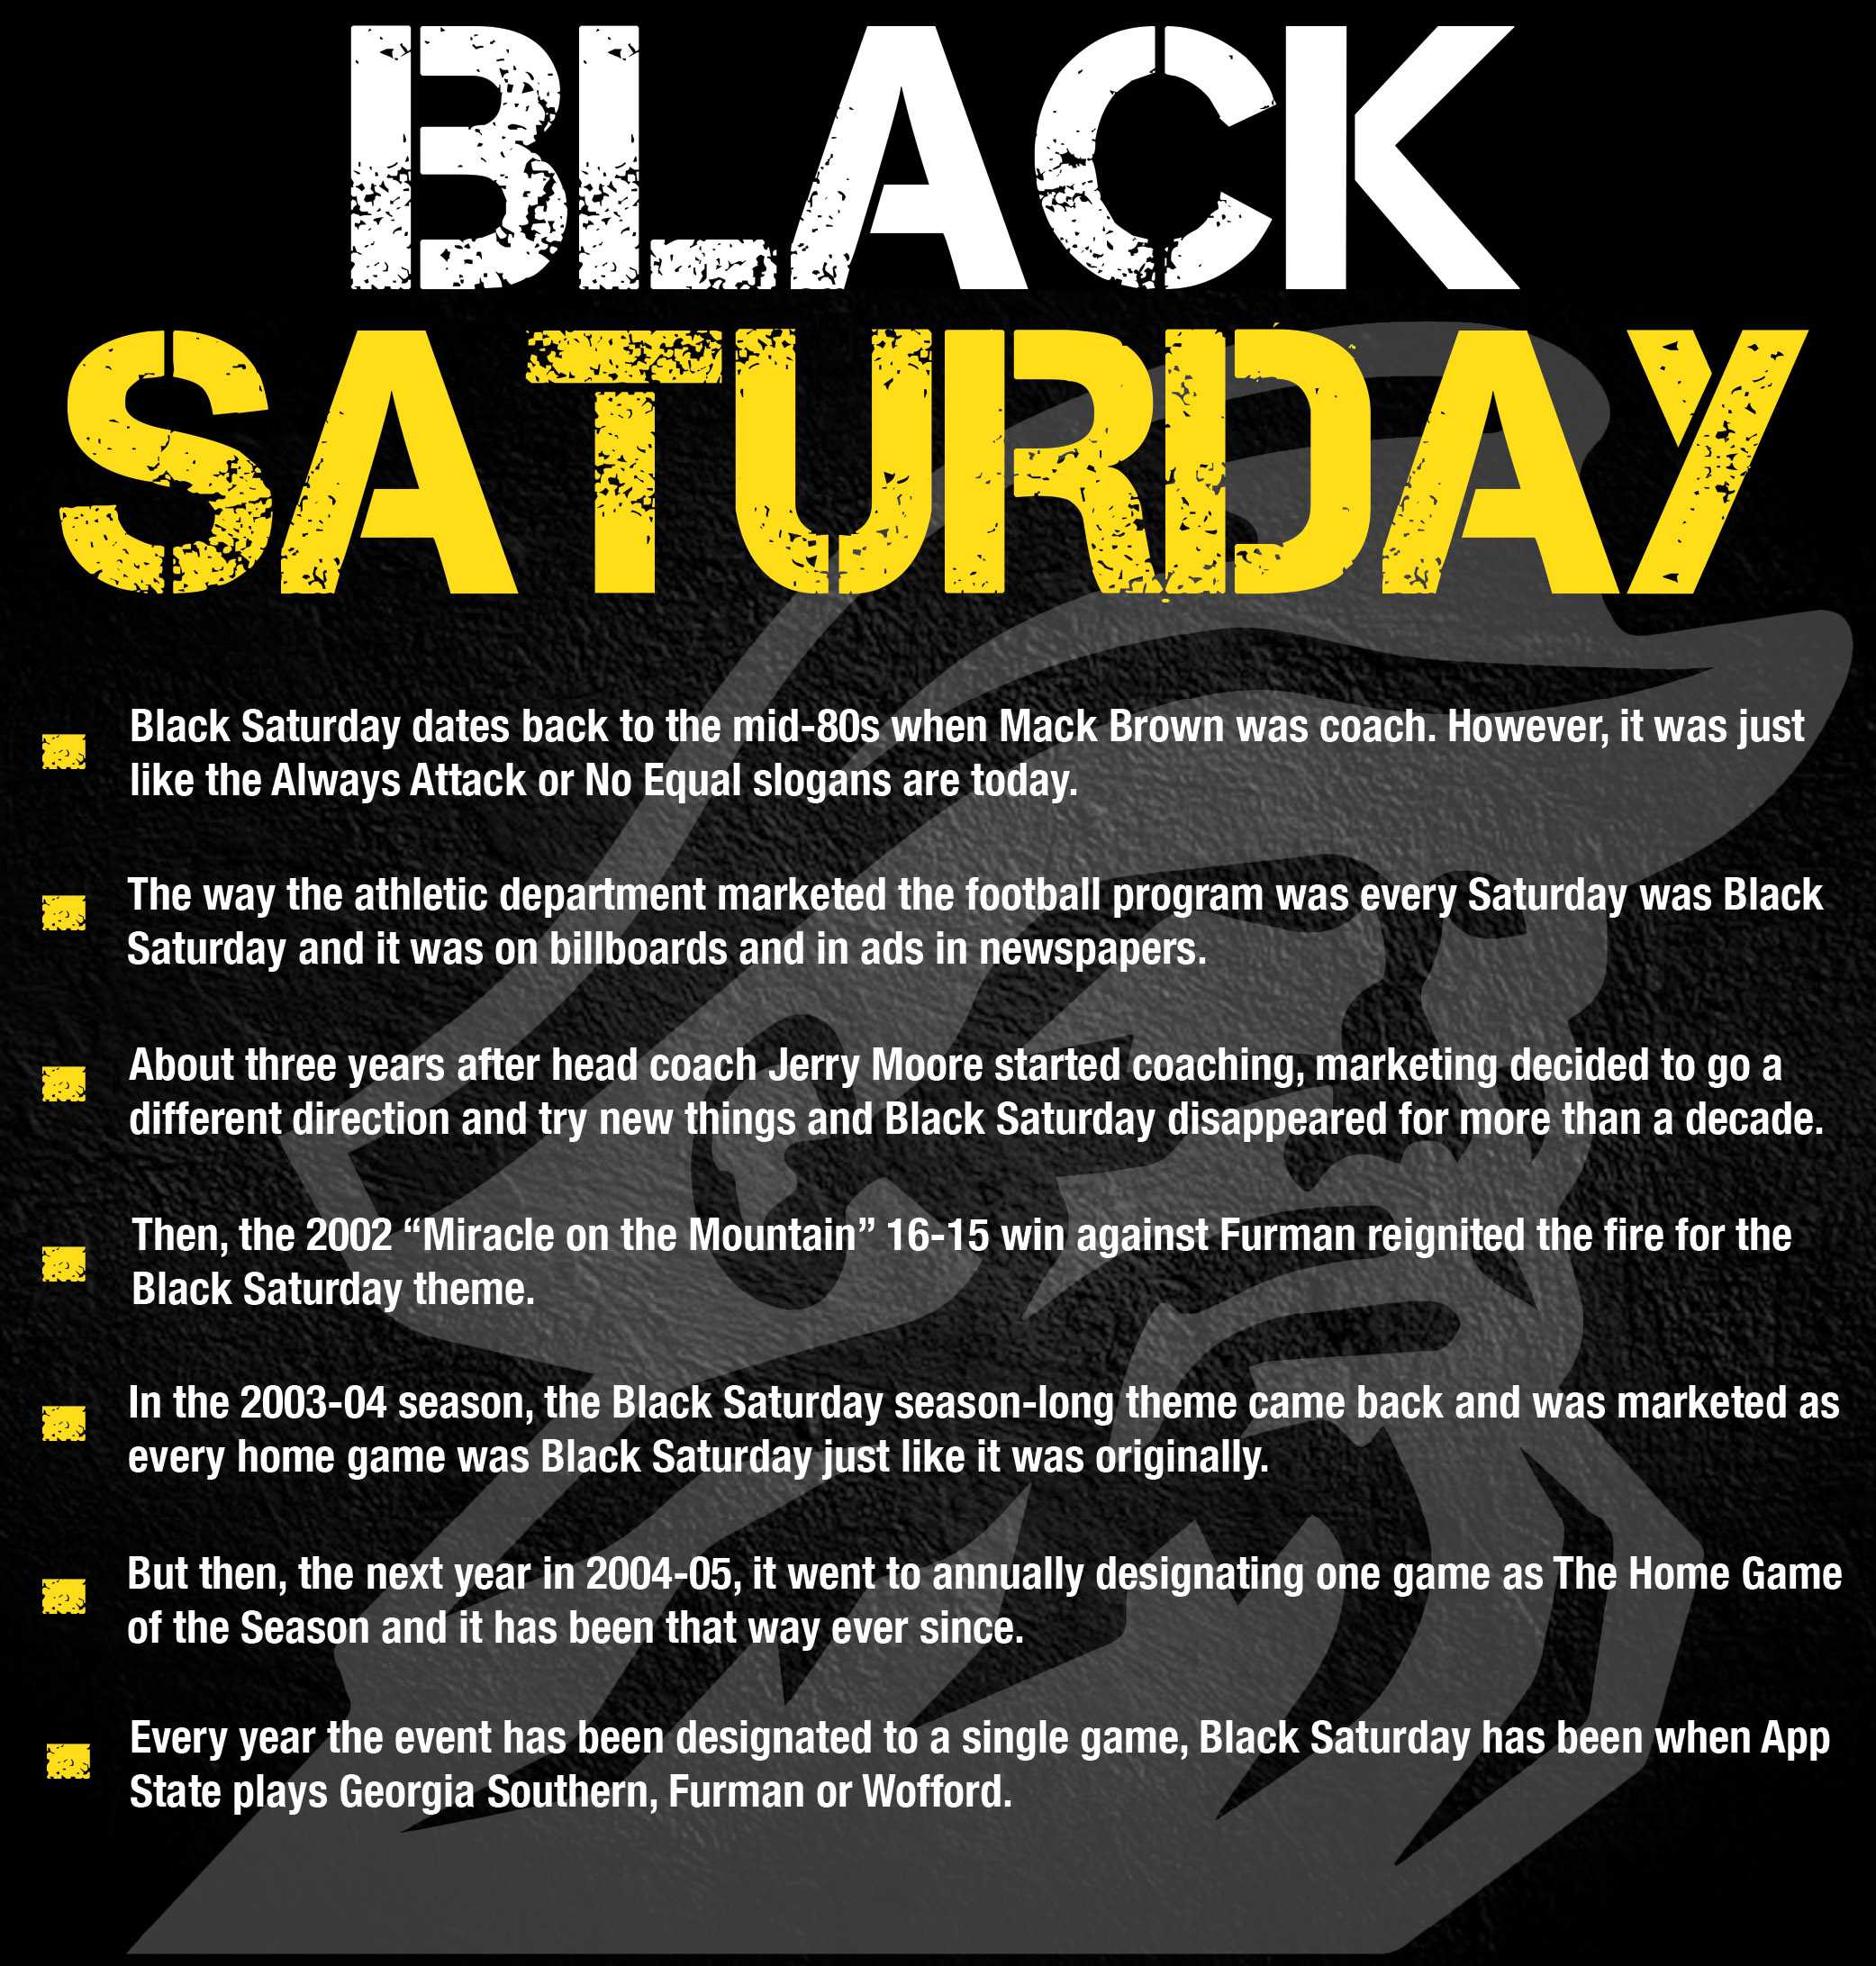 The history of Black Saturday The Appalachian